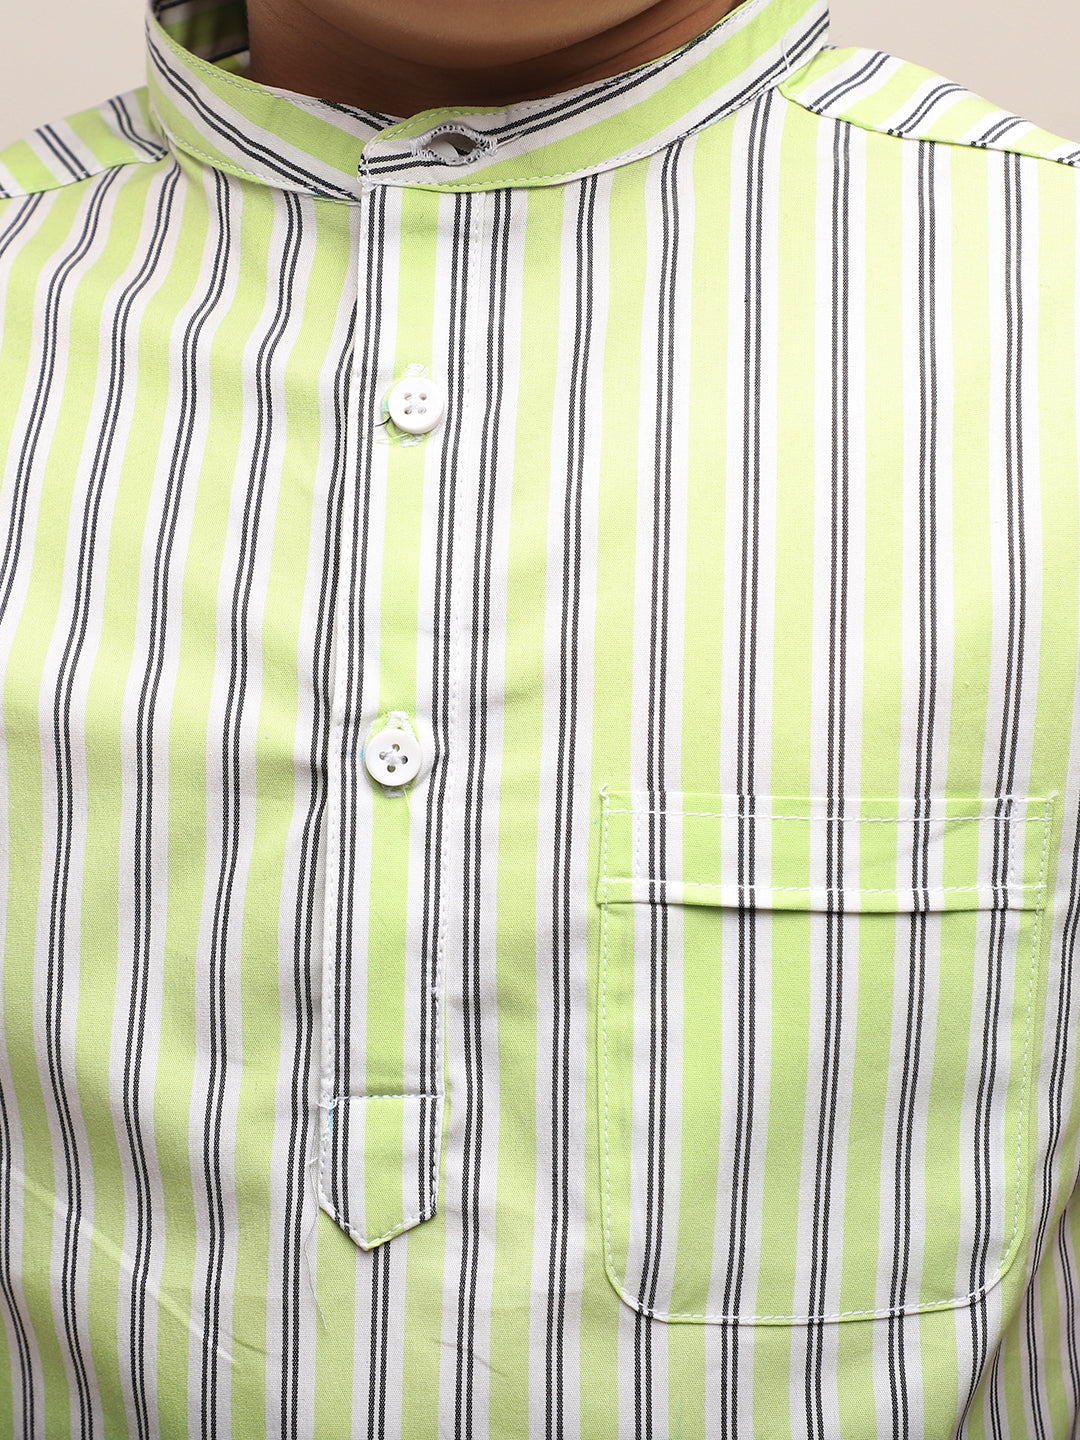 Mandarin Style Green Striped Shirt with Shorts